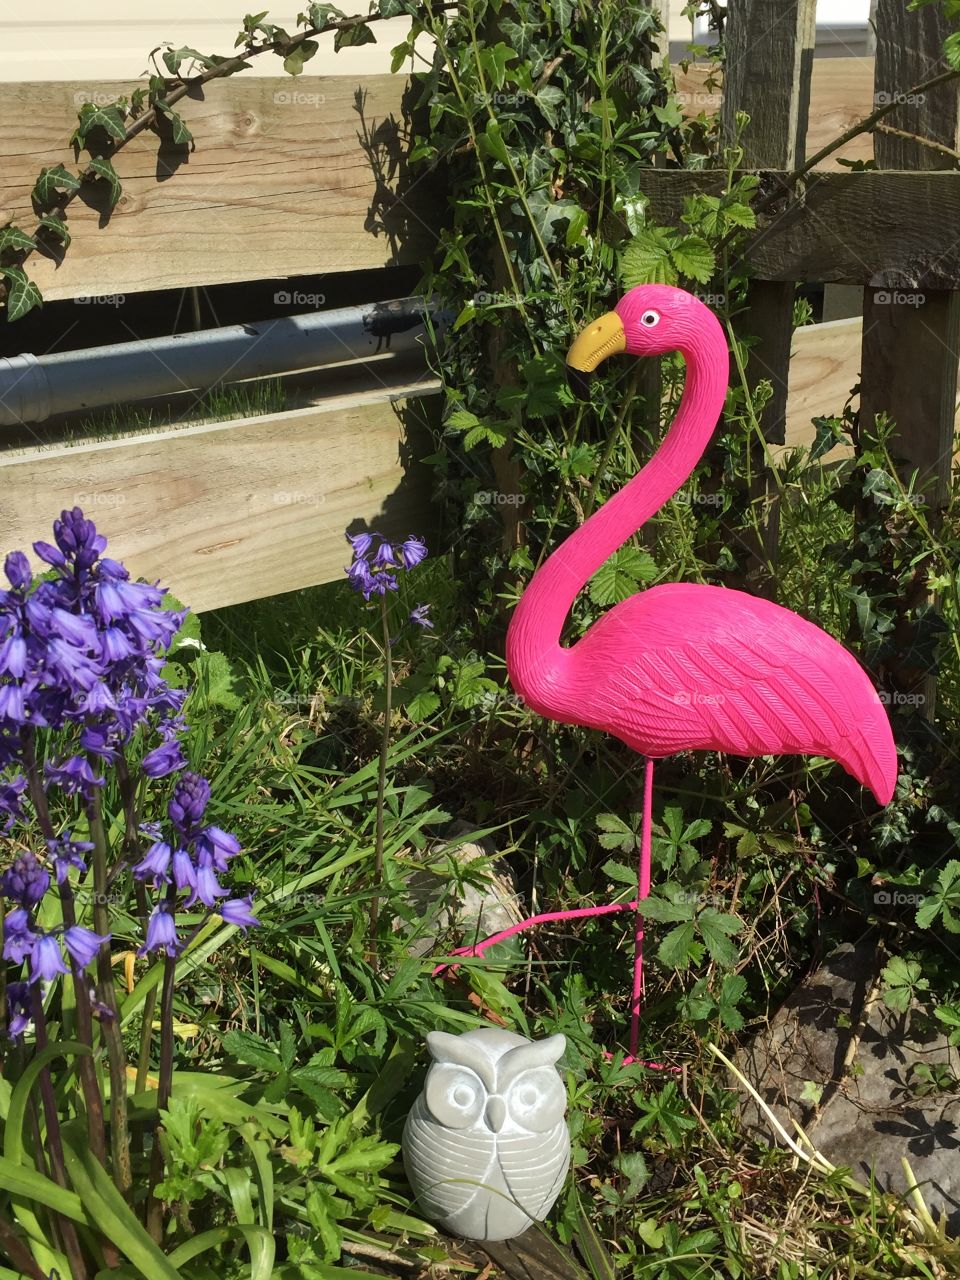 Kitsch garden with plastic pink flamingo